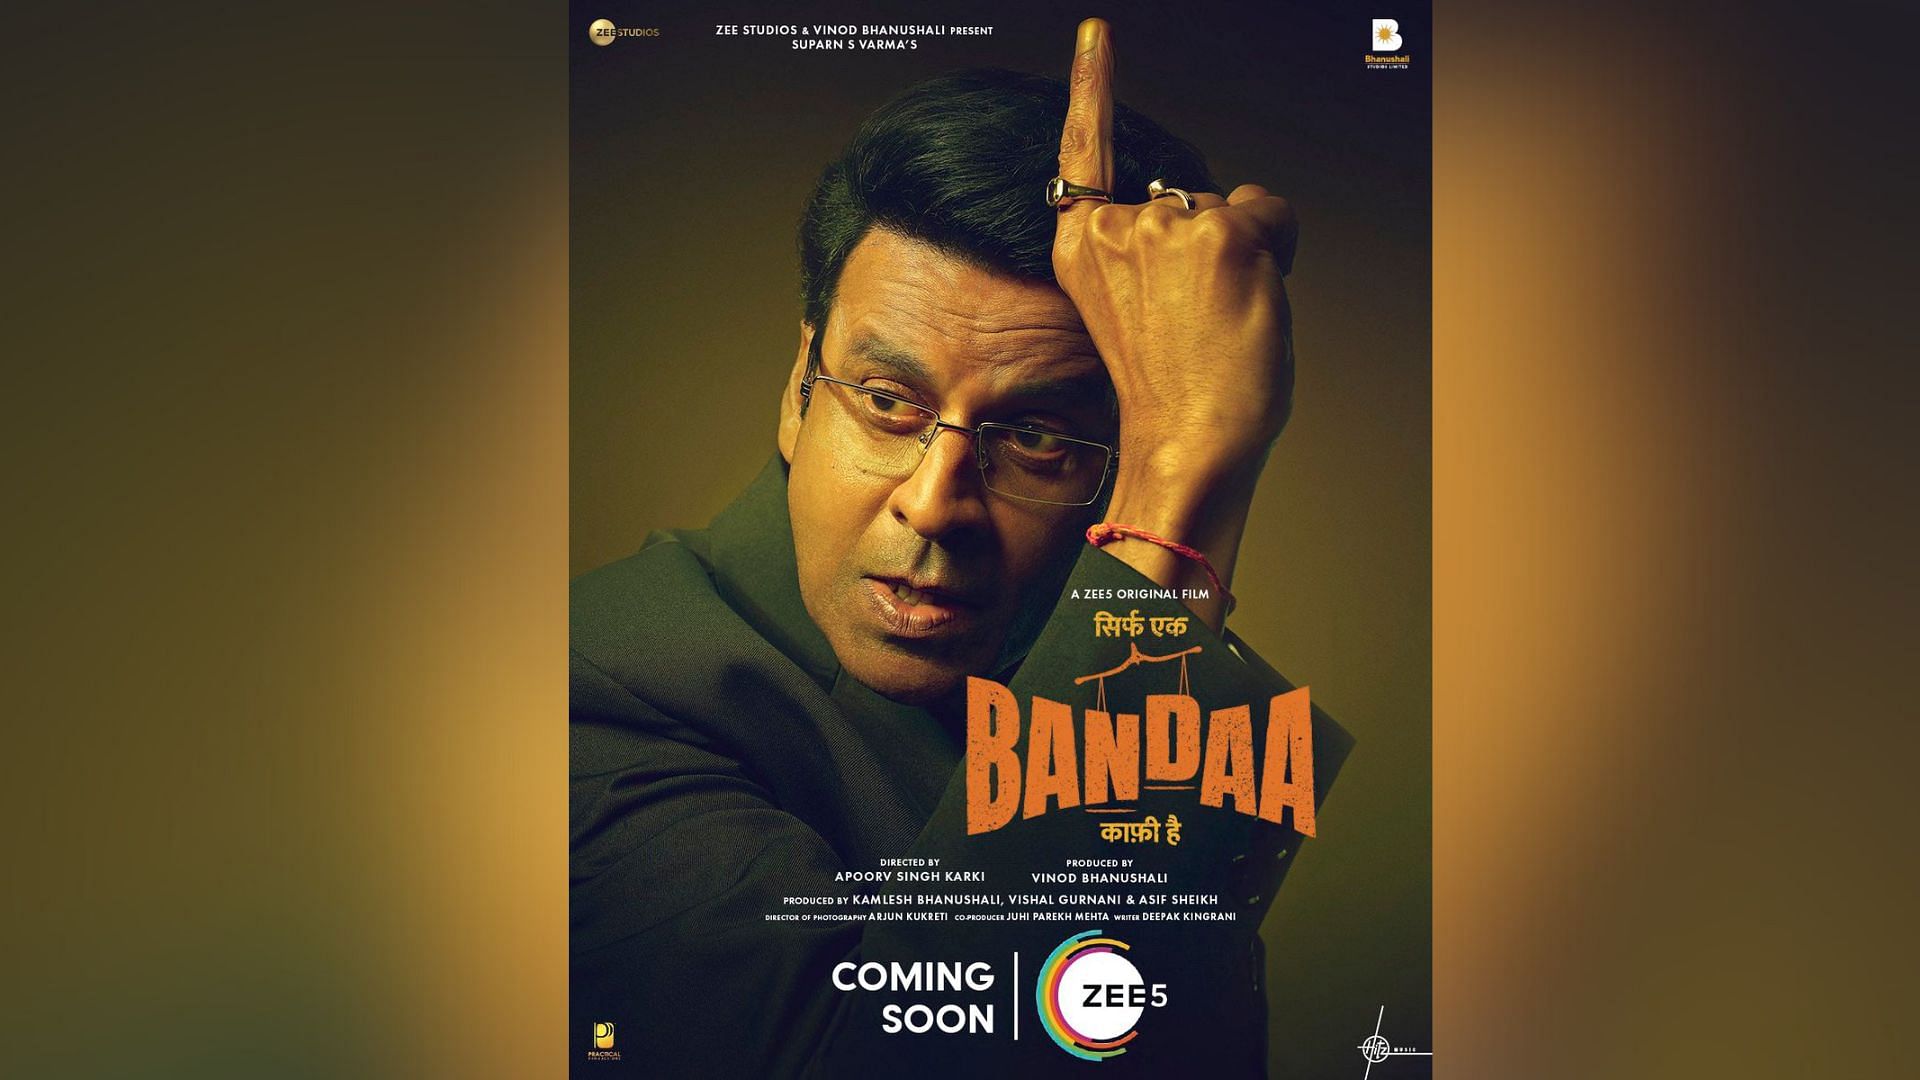 <div class="paragraphs"><p>Manoj Bajpayee starrer ‘Bandaa’ to make digital premiere on Zee5</p></div>